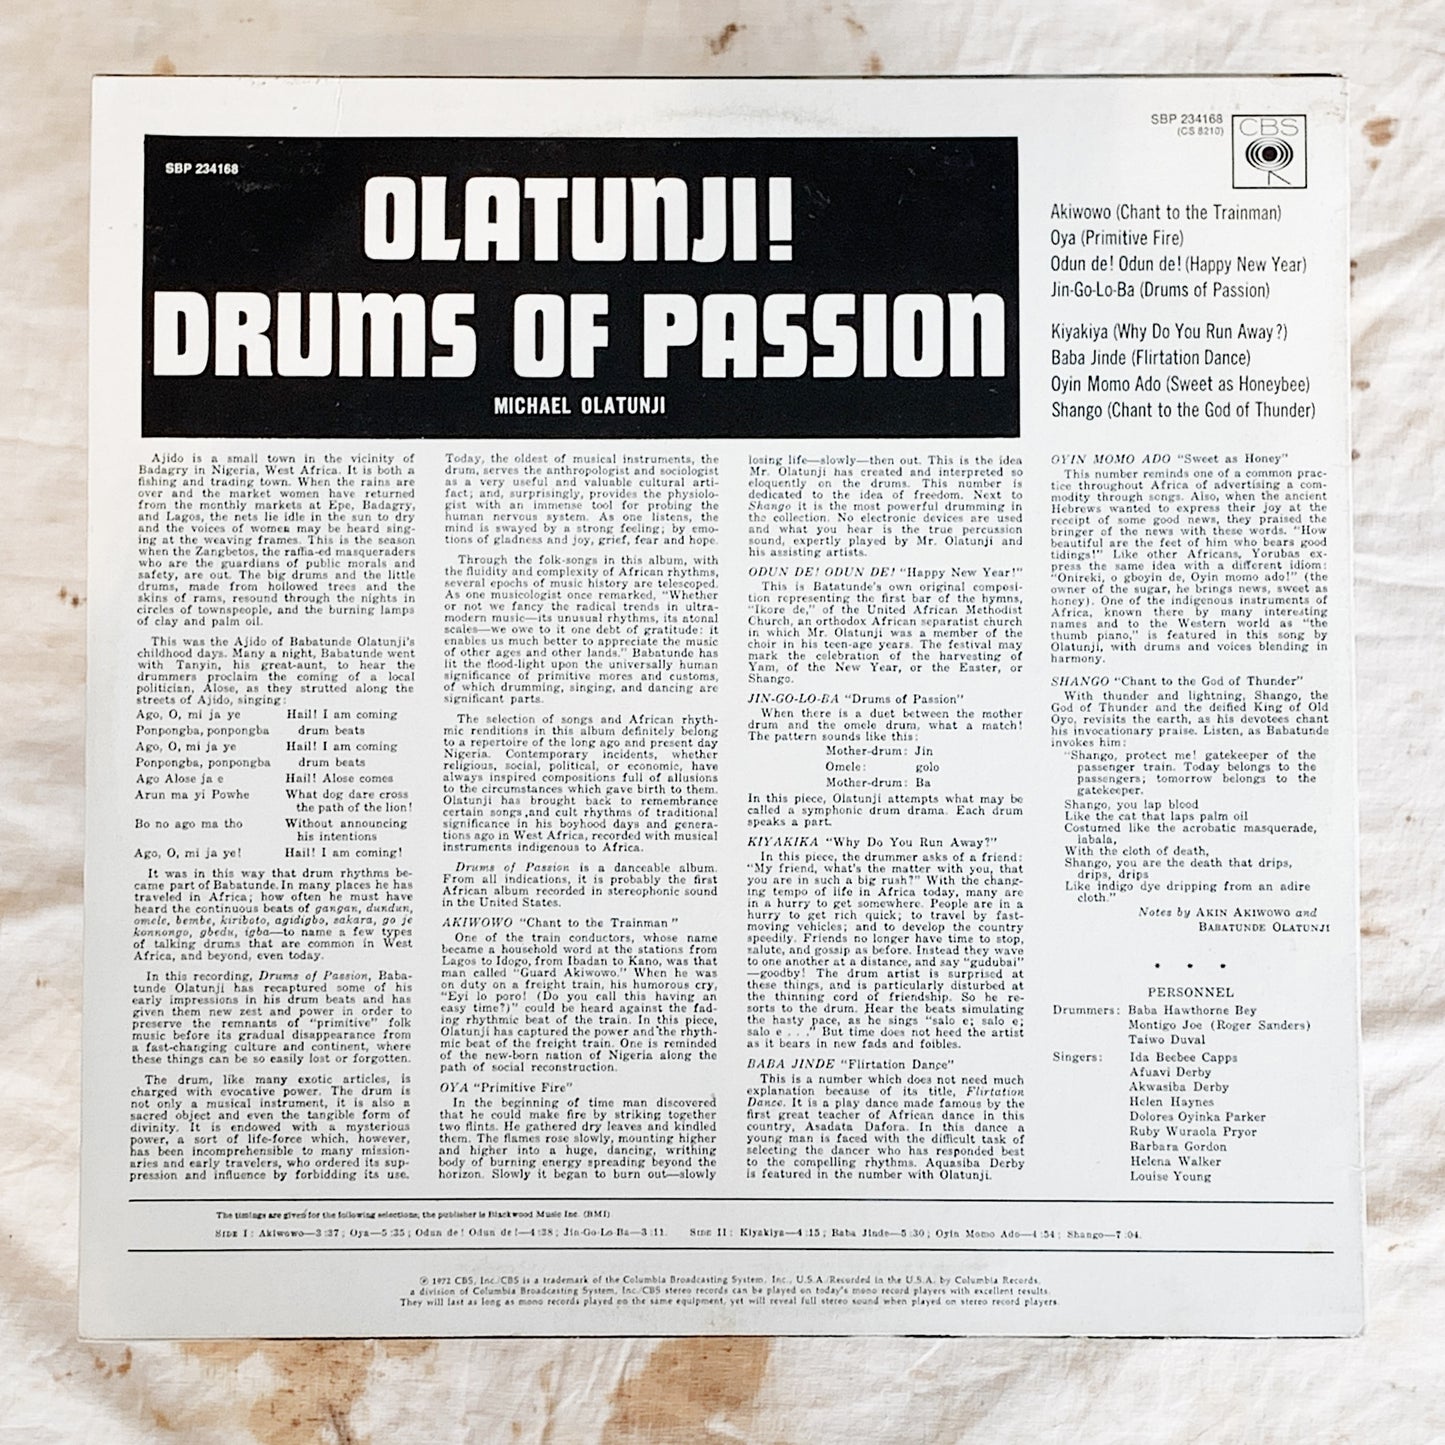 Olatunji! / Drums Of Passion LP